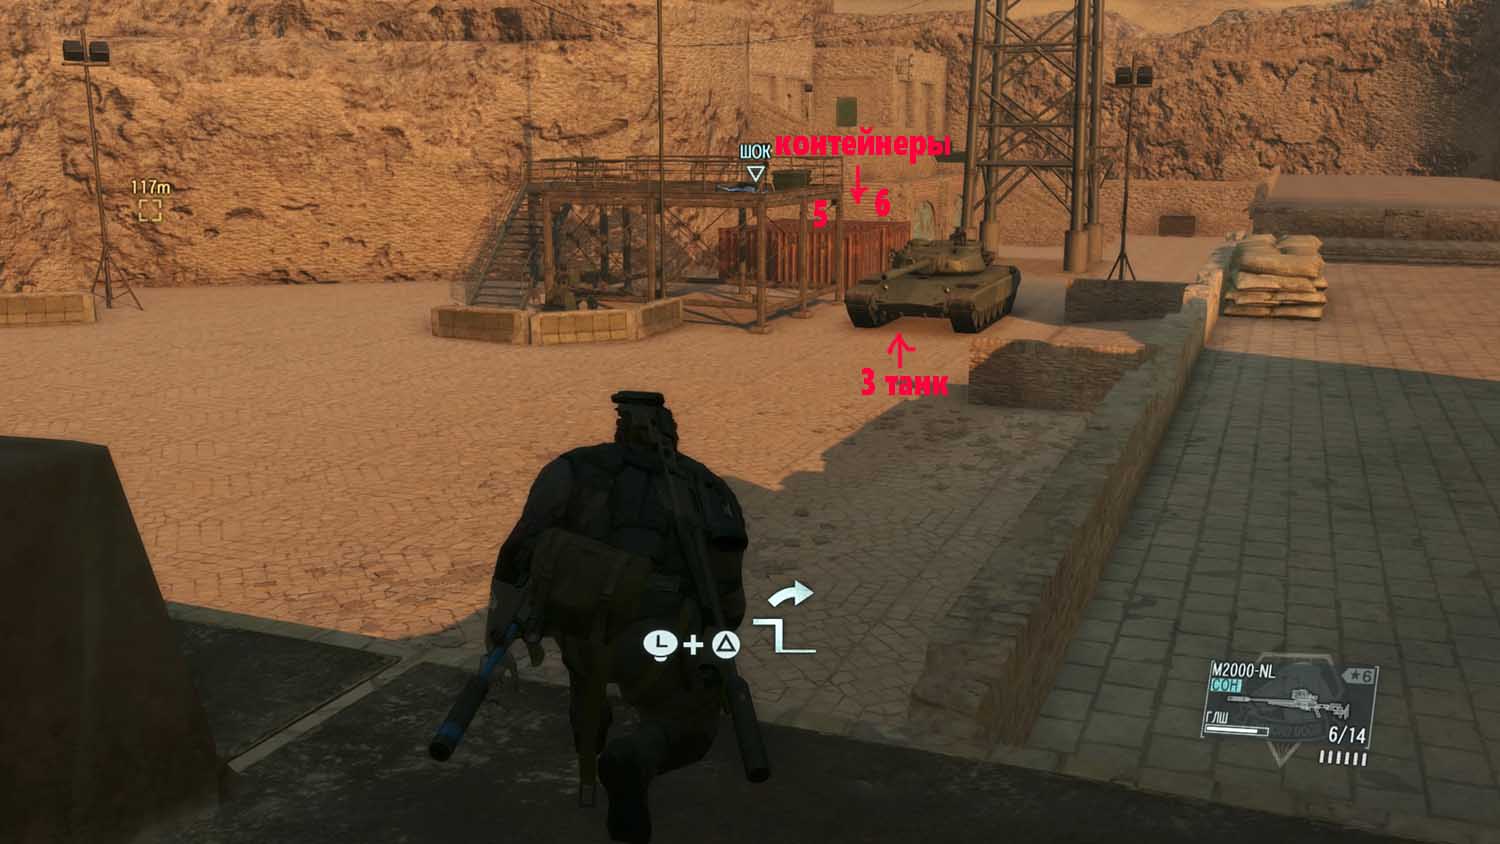 Metal Gear Solid V: The Phantom Pain Из ОКБ "Ноль" эвакуированы 3 танка